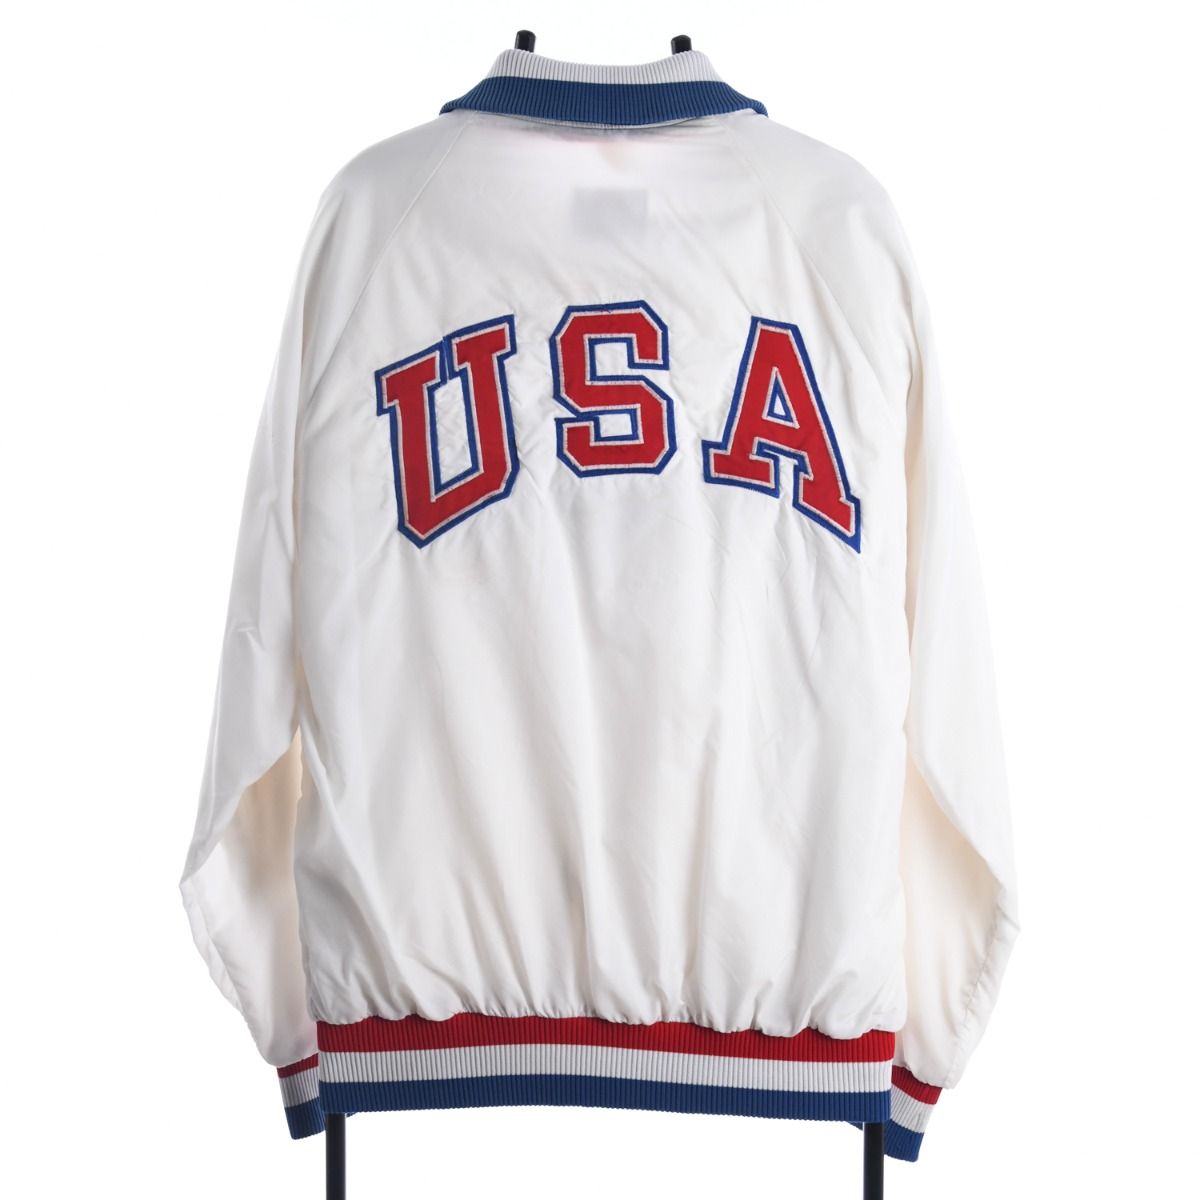 Champion USA Olympic Training Centre Jacket